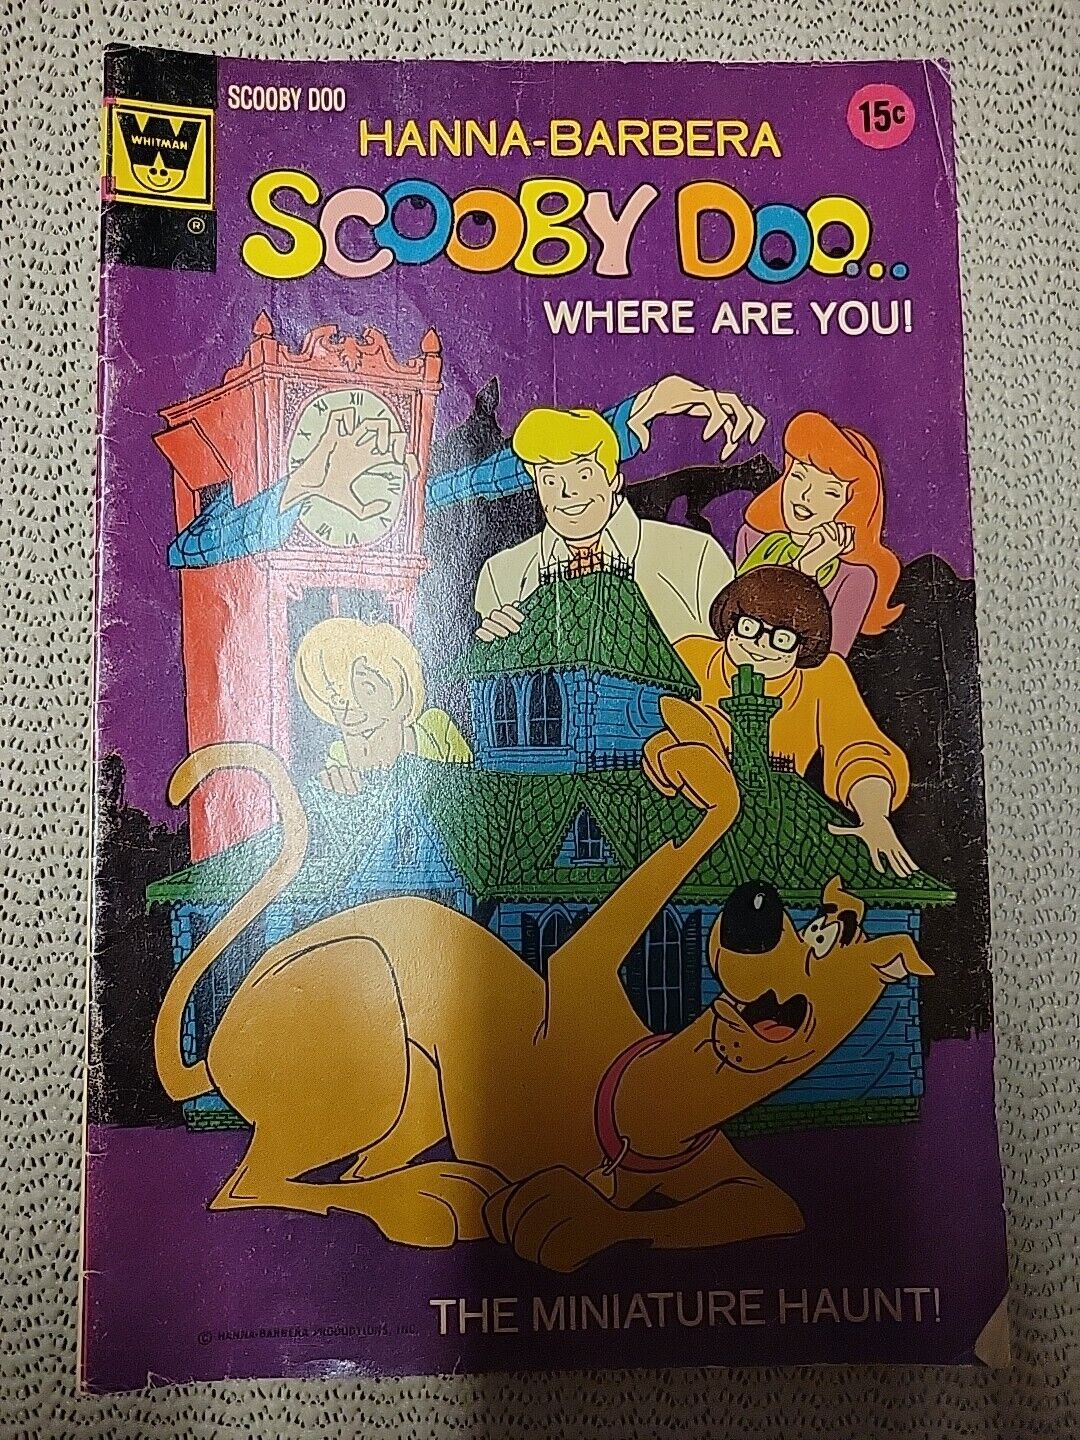 Hanna-Barbera Scooby Doo Comic Book The Miniature Haunt #13 August 1972